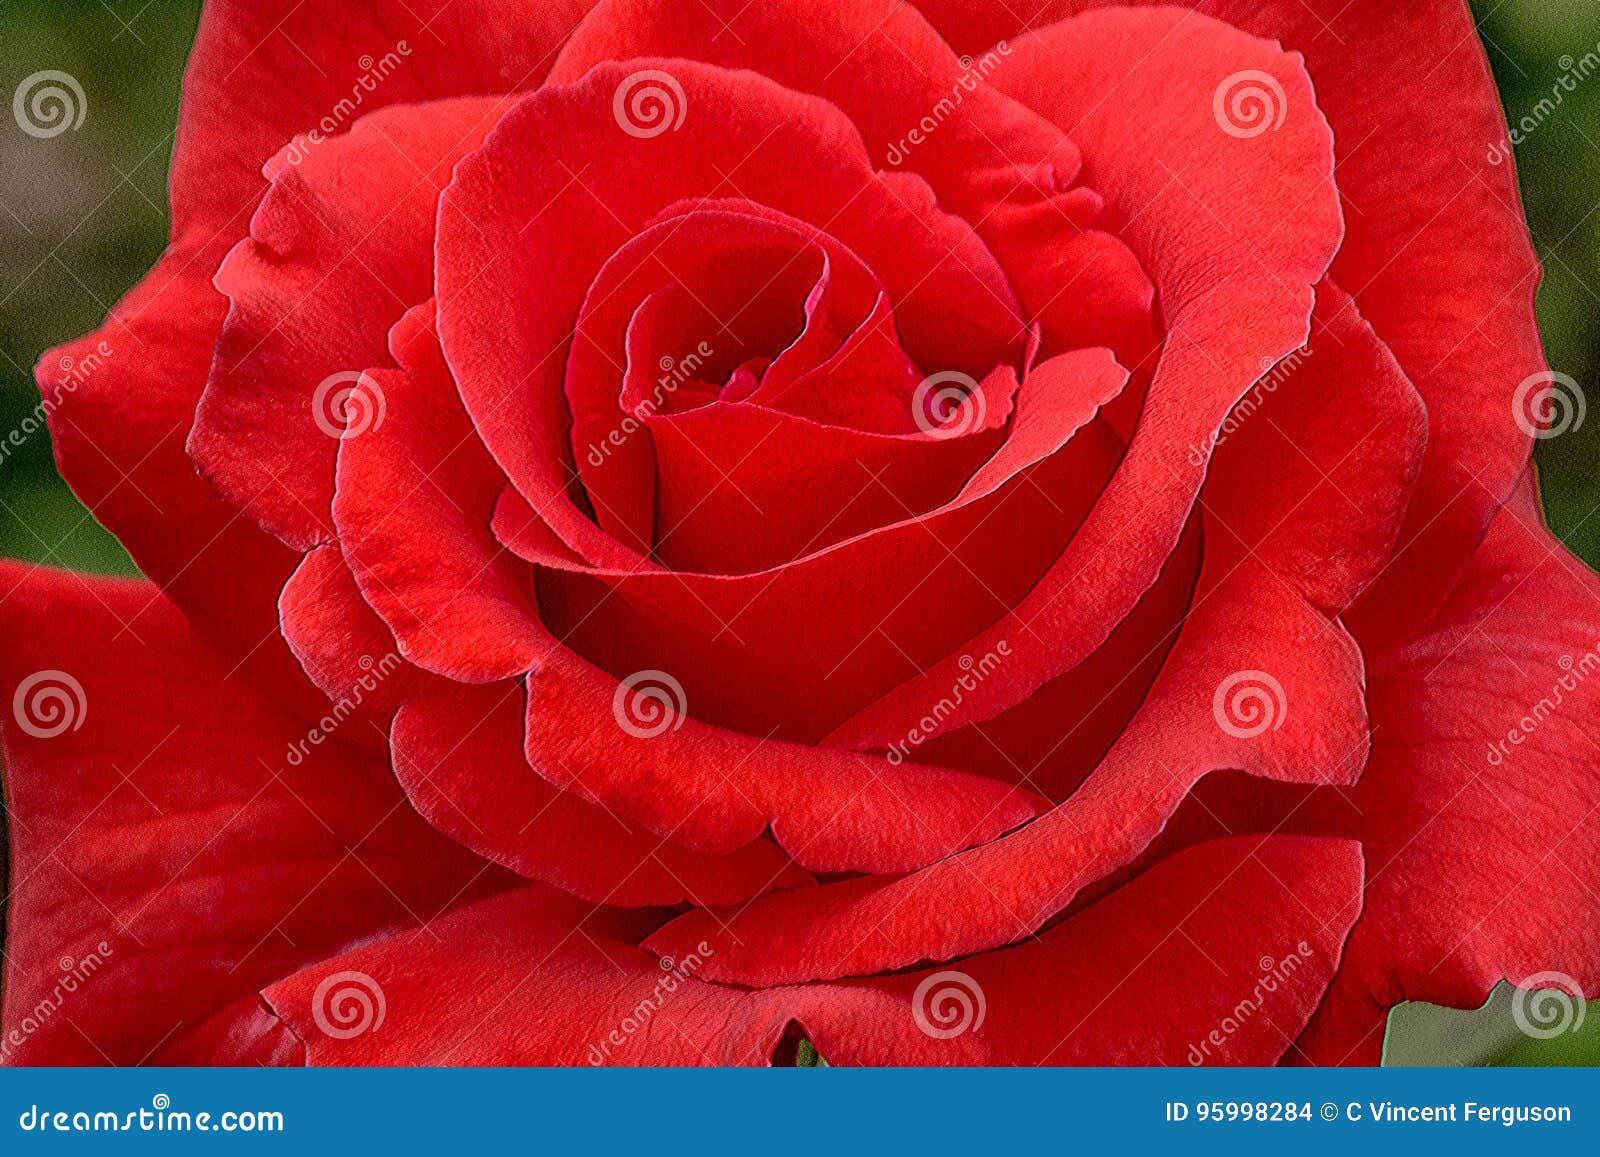 futura red rose